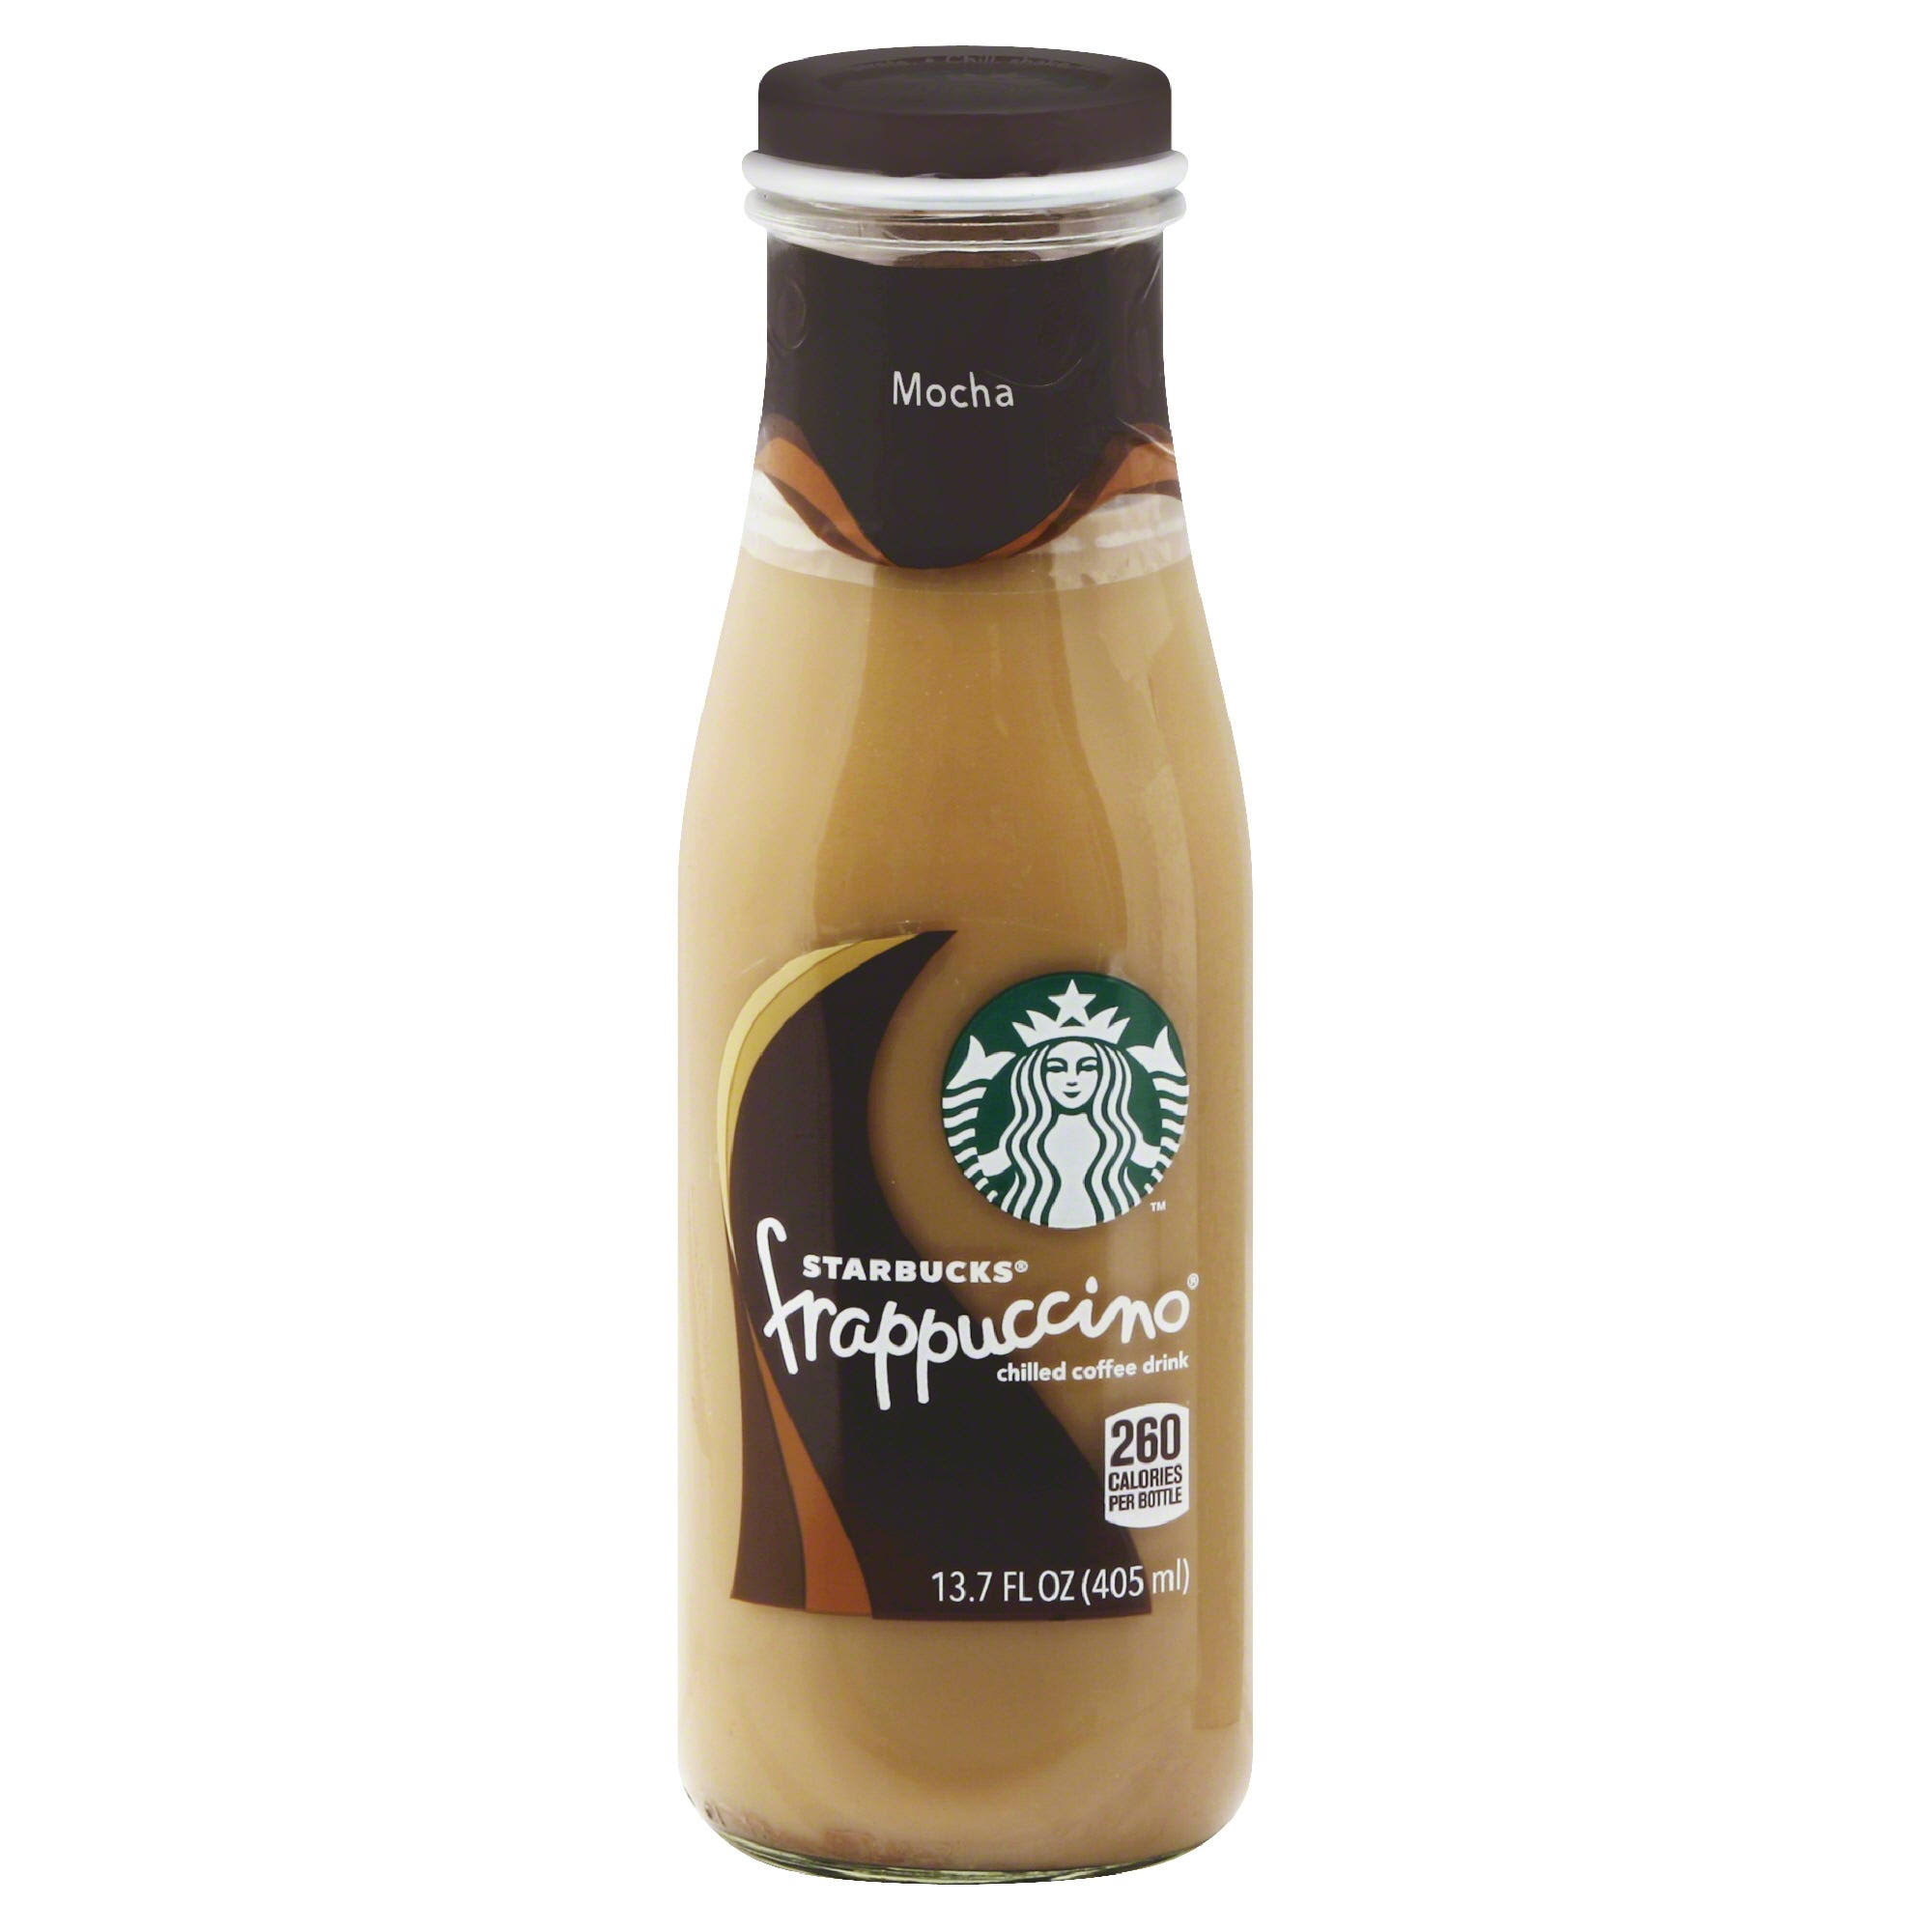 Starbucks Frappuccino Coffee Drink - Mocha, 405ml